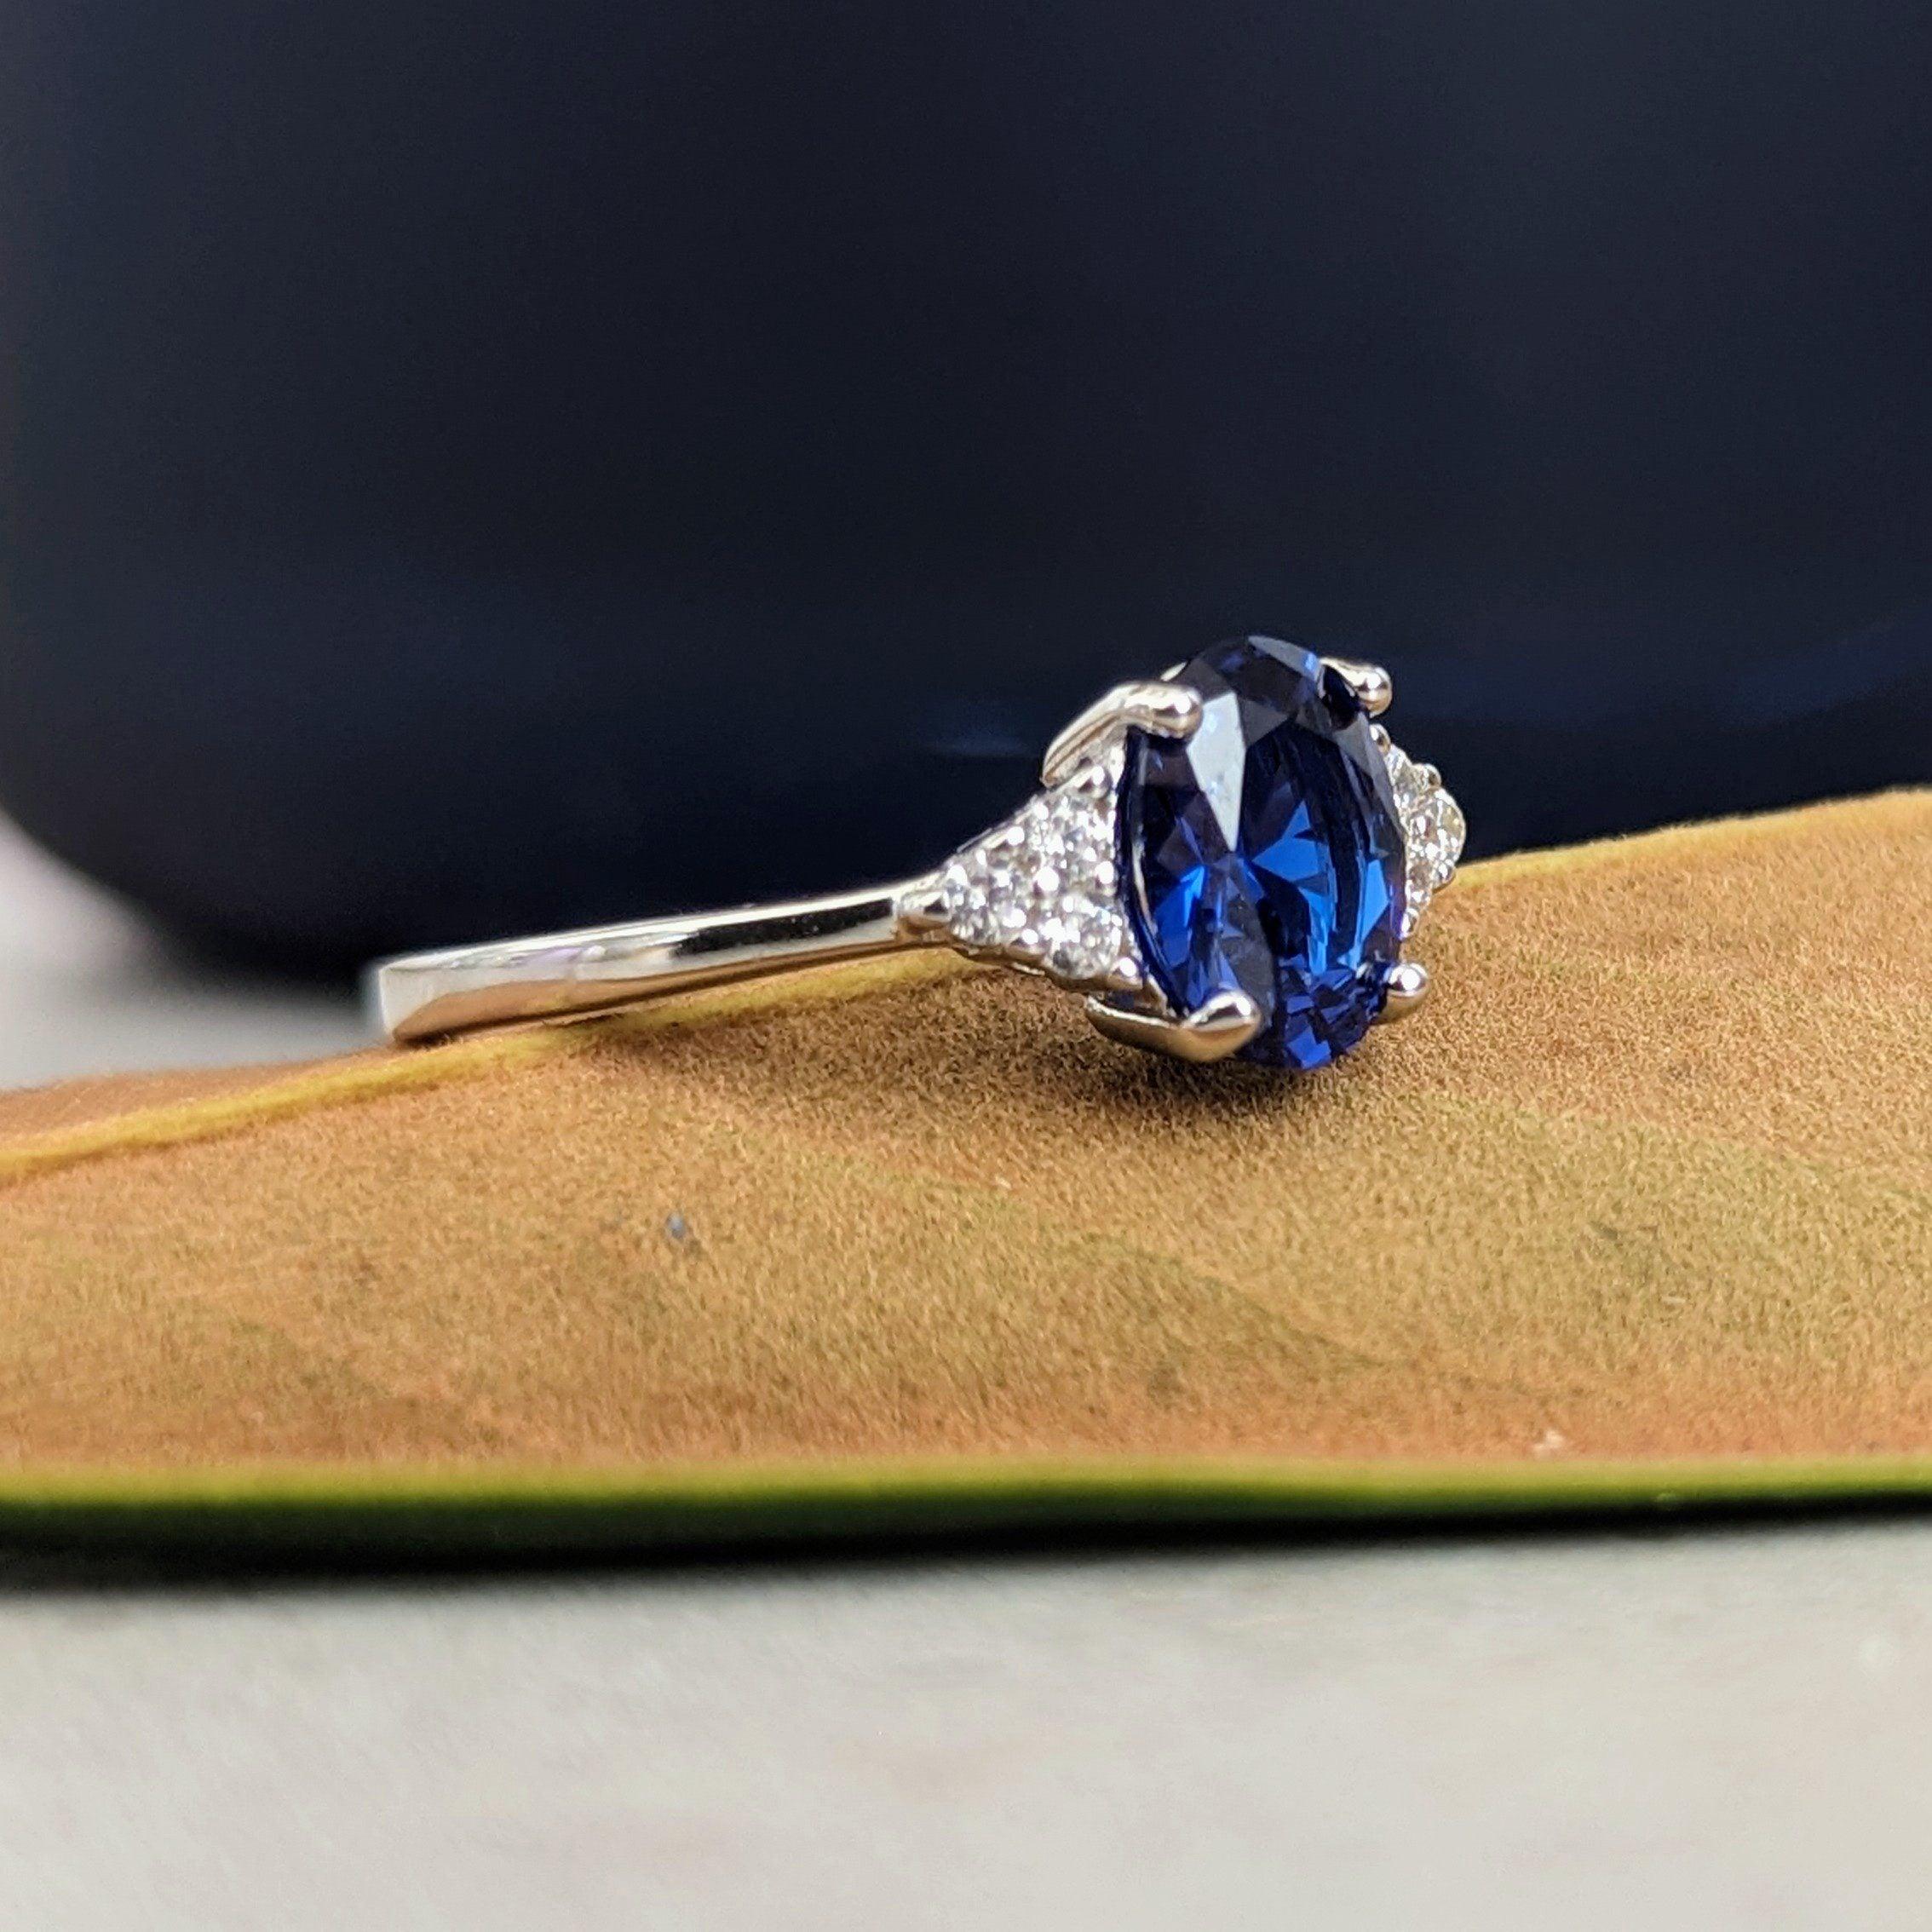 Sapphire Aphrodite Ring - Stunning Blue